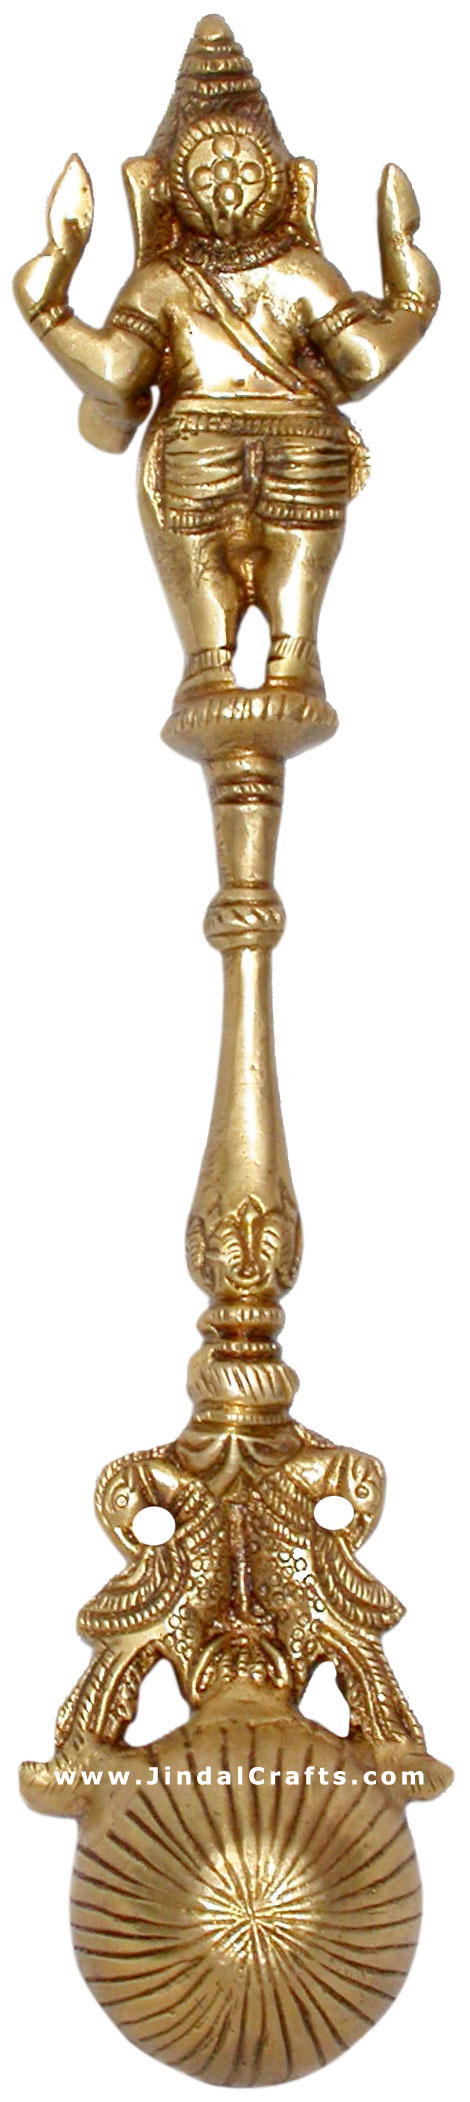 Lord Ganesha Spoon for Havan Aahuti - Handmade Artifact